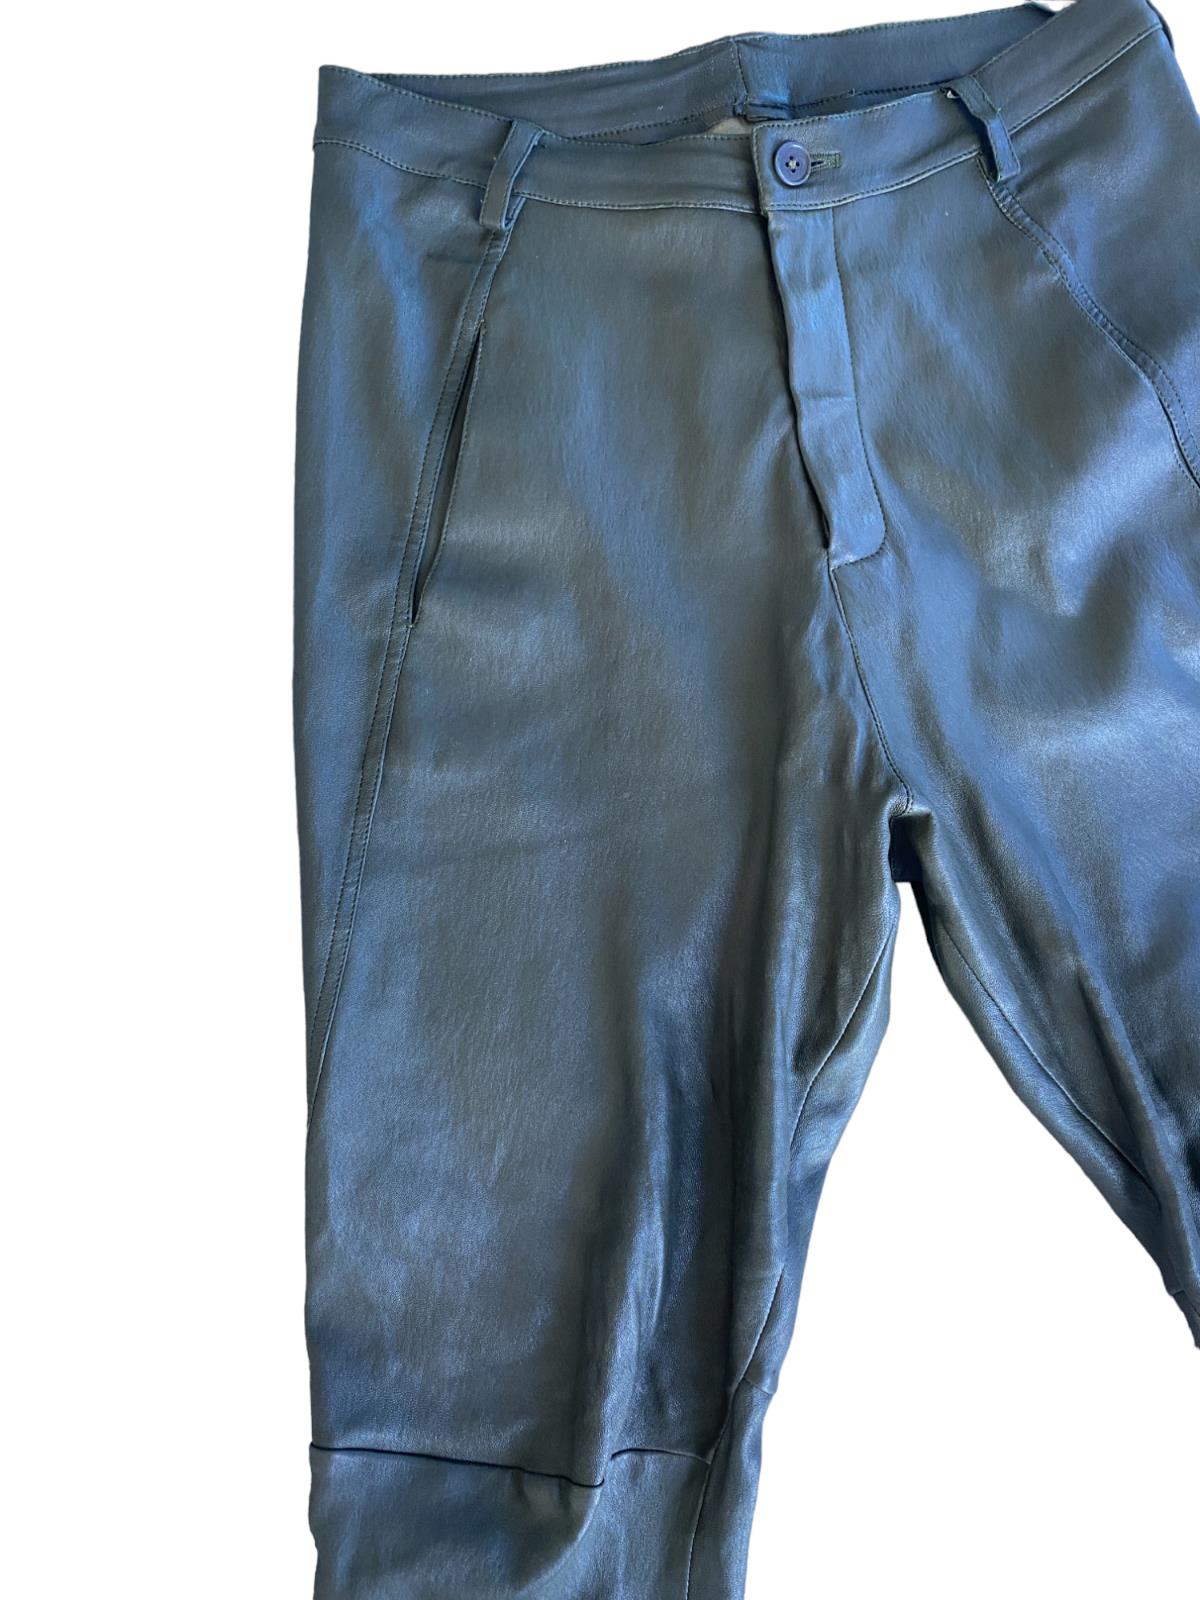 Scanlan Theodore Stretch Leather Pants | Skinny leg, Mid Rise, Khaki, Size 10